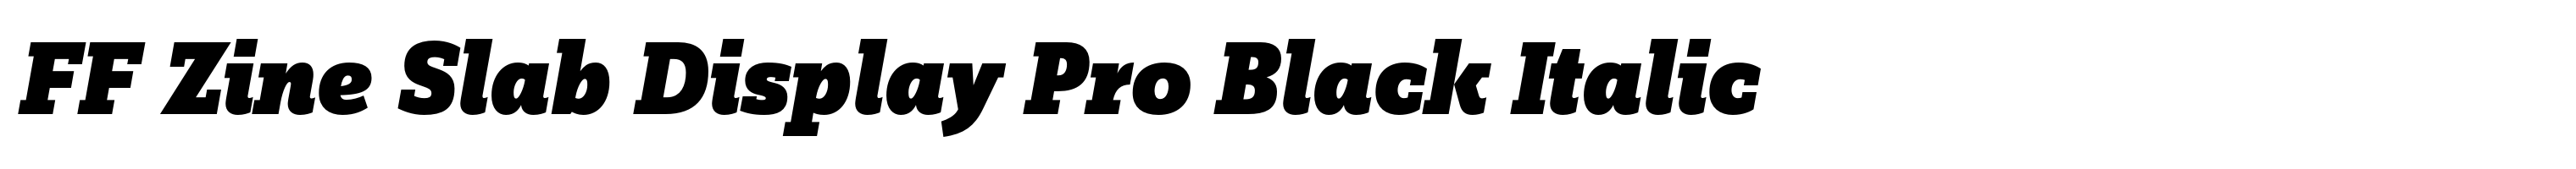 FF Zine Slab Display Pro Black Italic